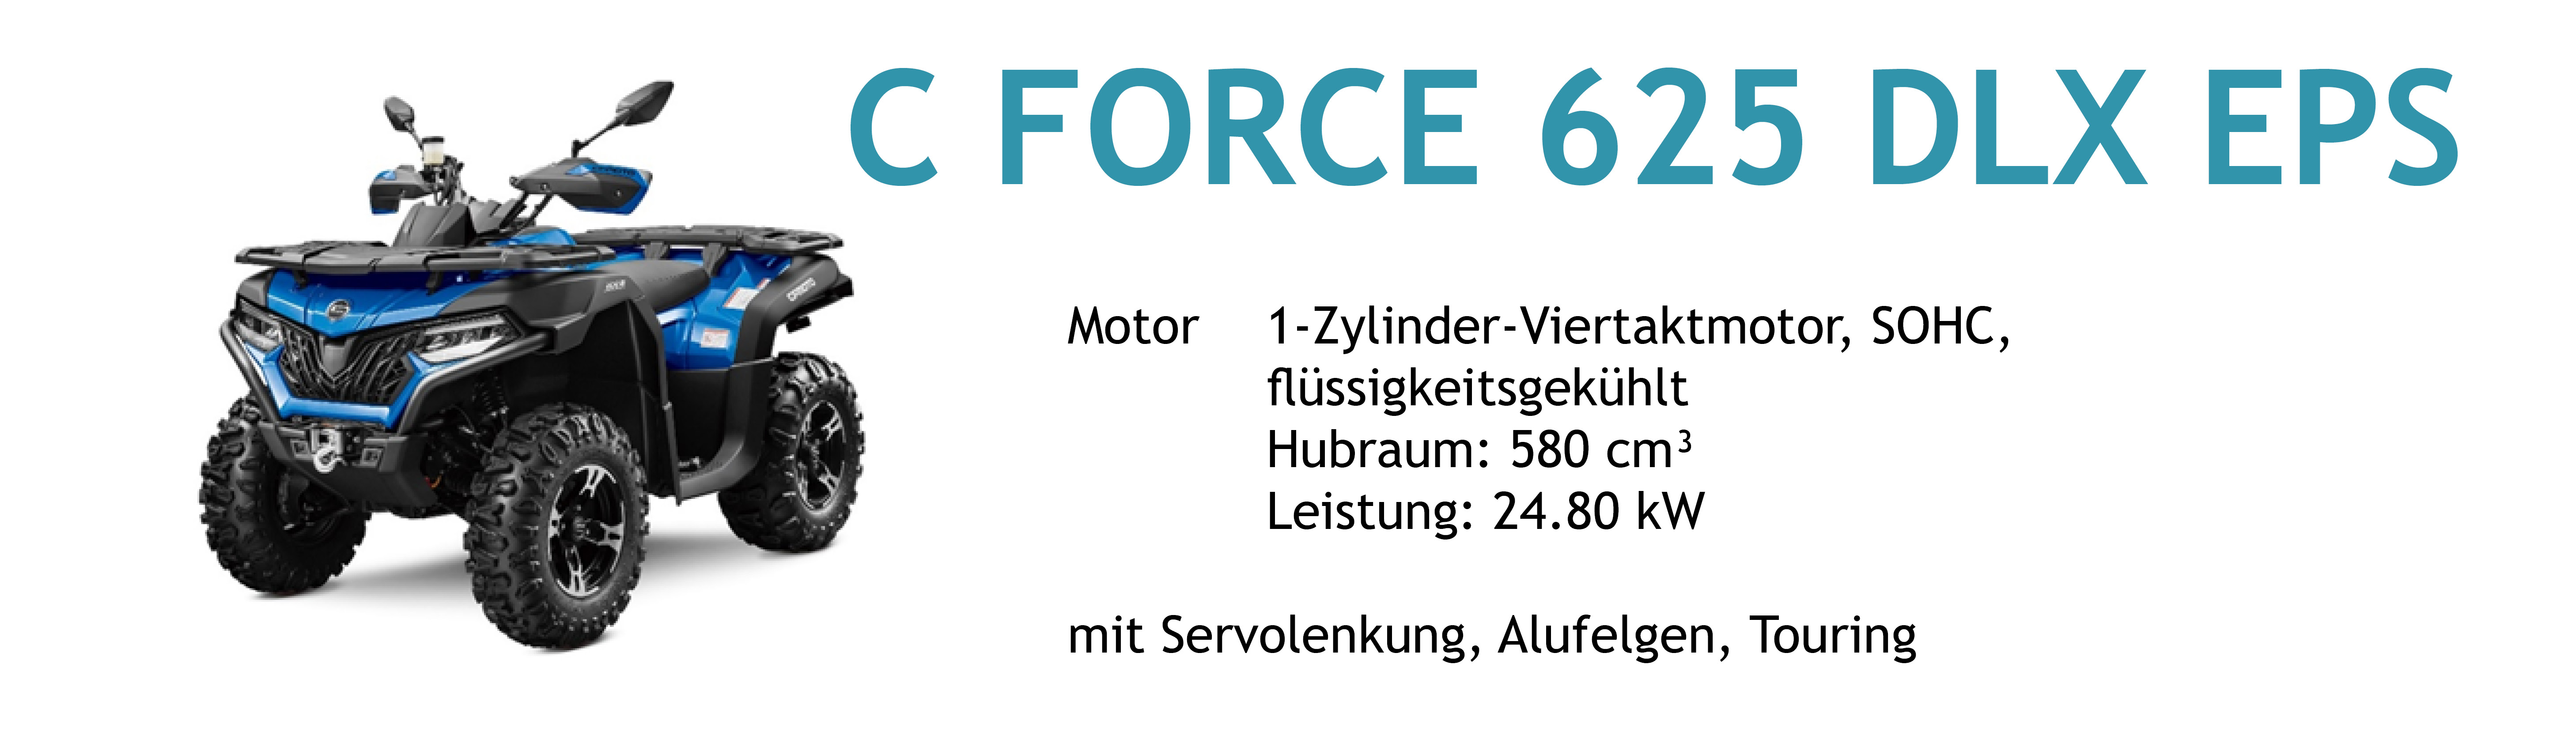 Cforce625 DLX EPS